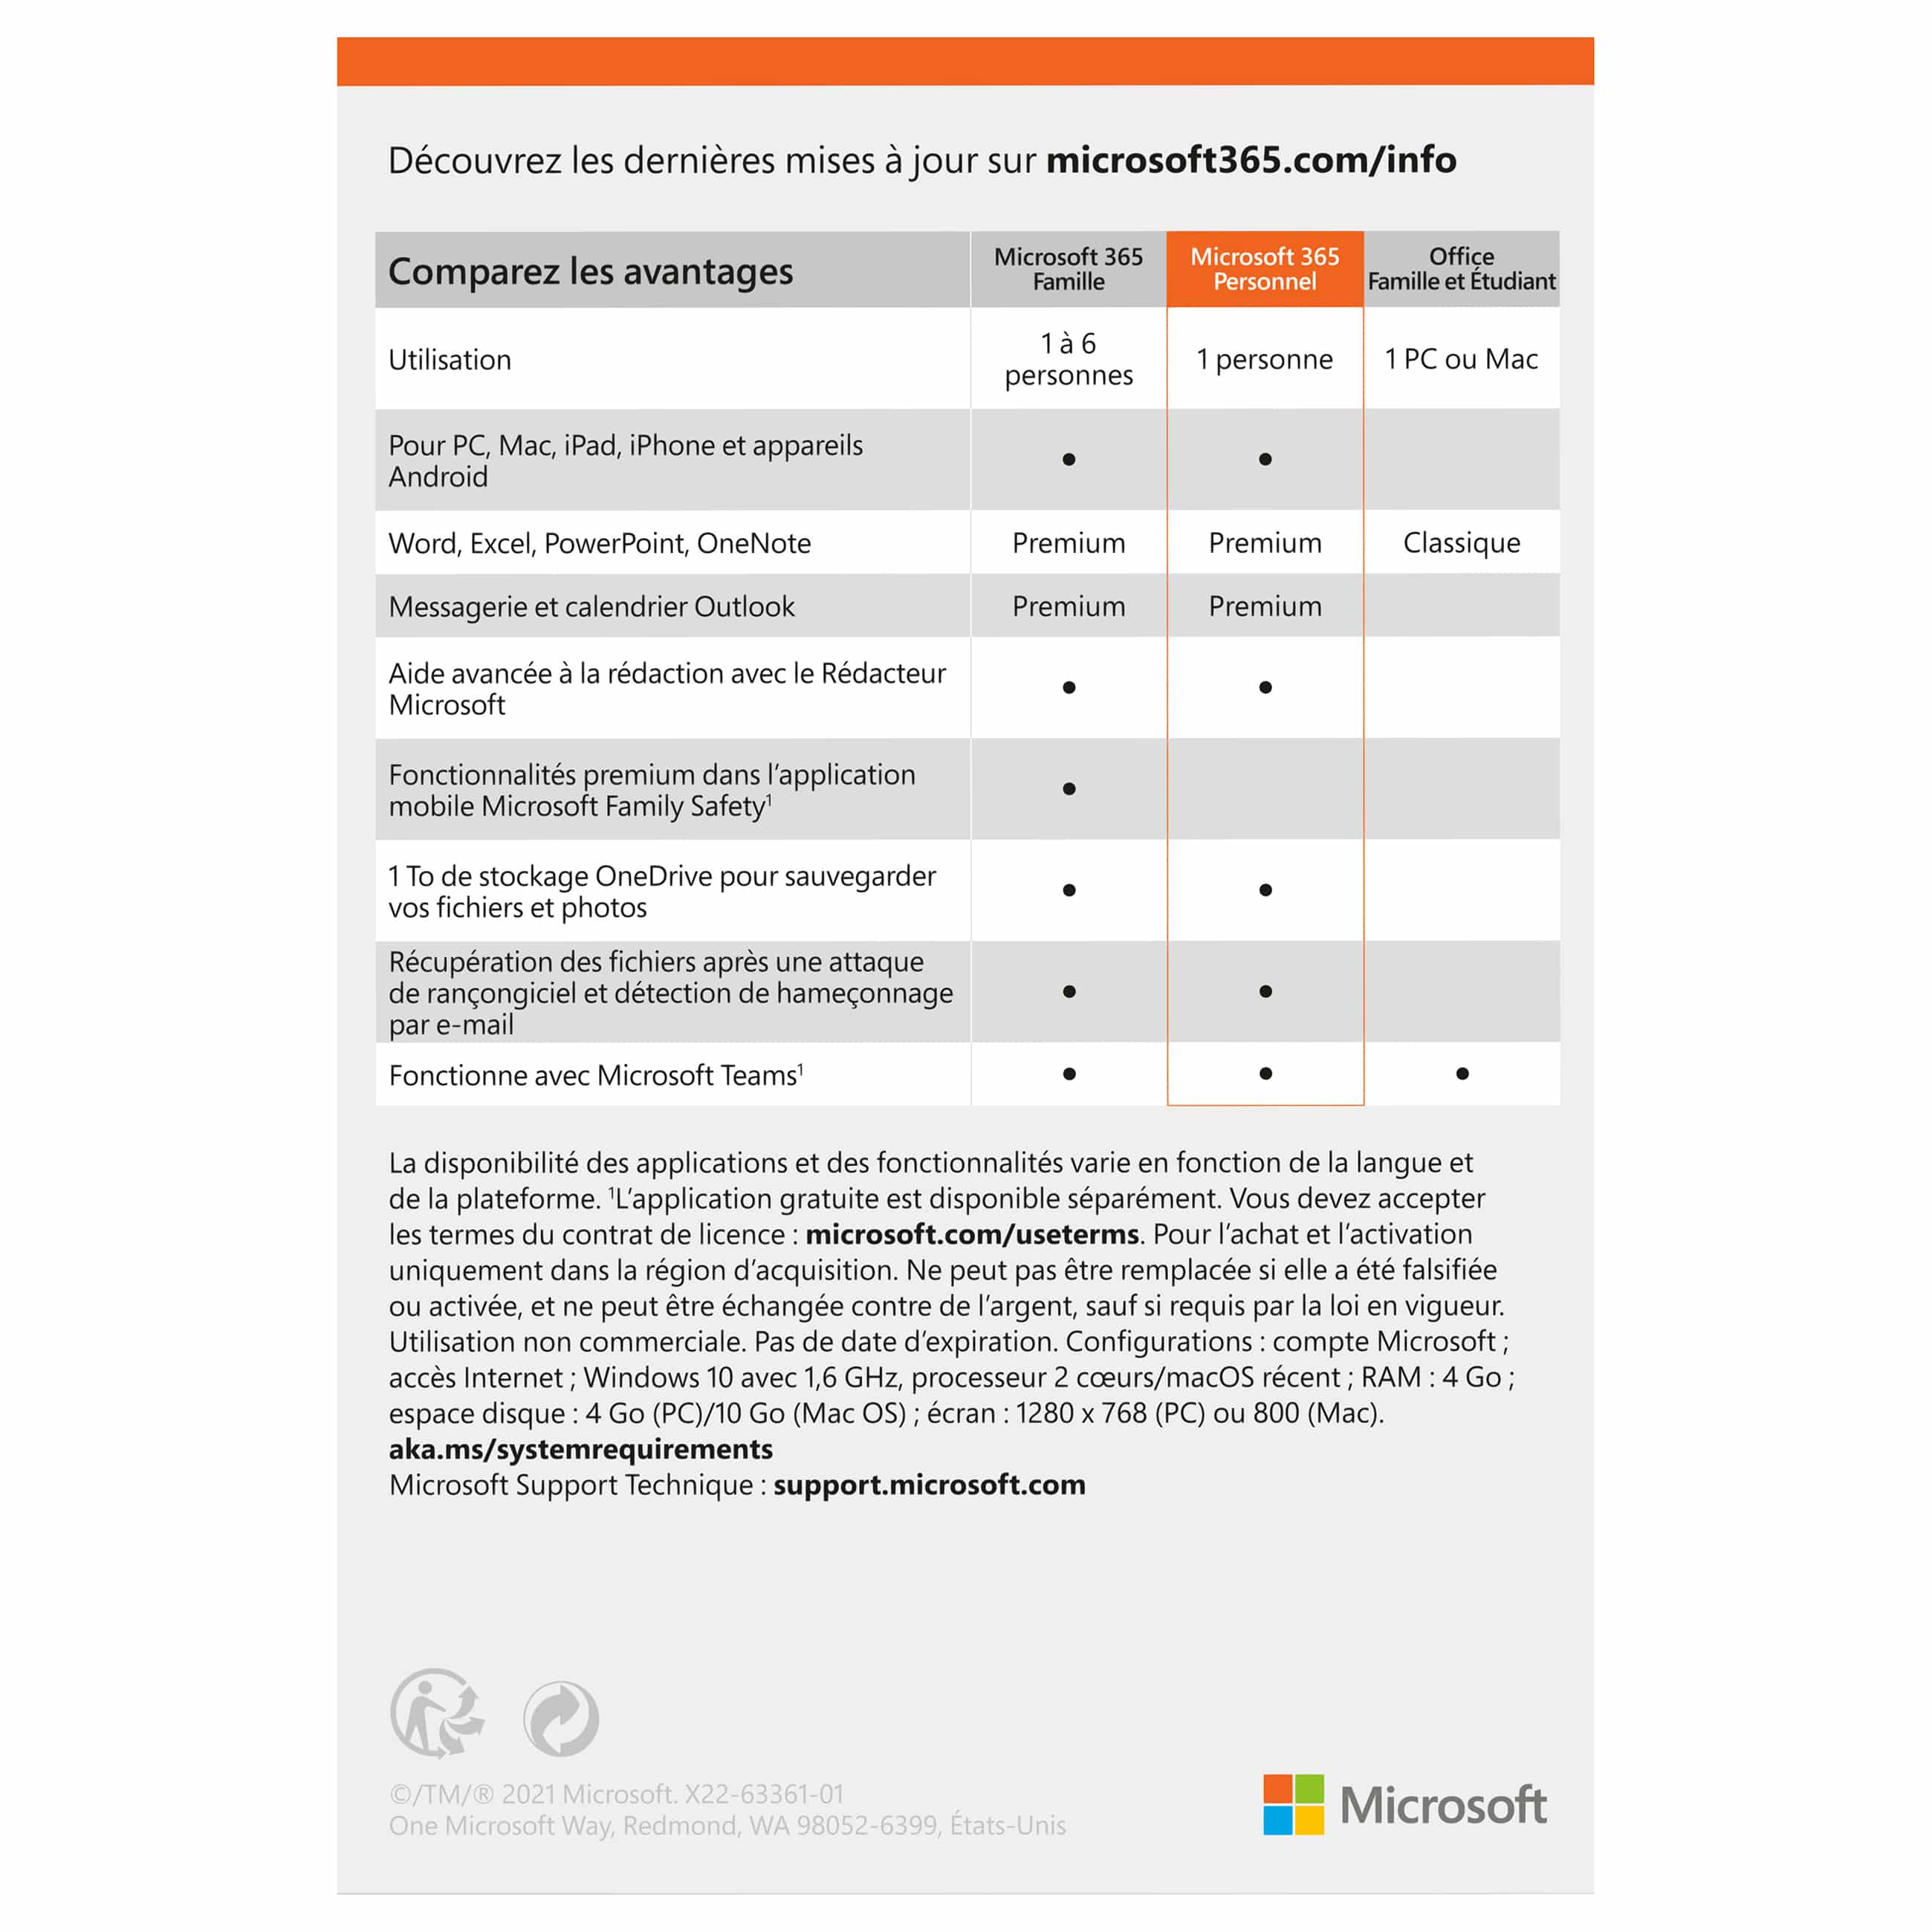 Logiciel Microsoft Office 365 - Personnel (1an)